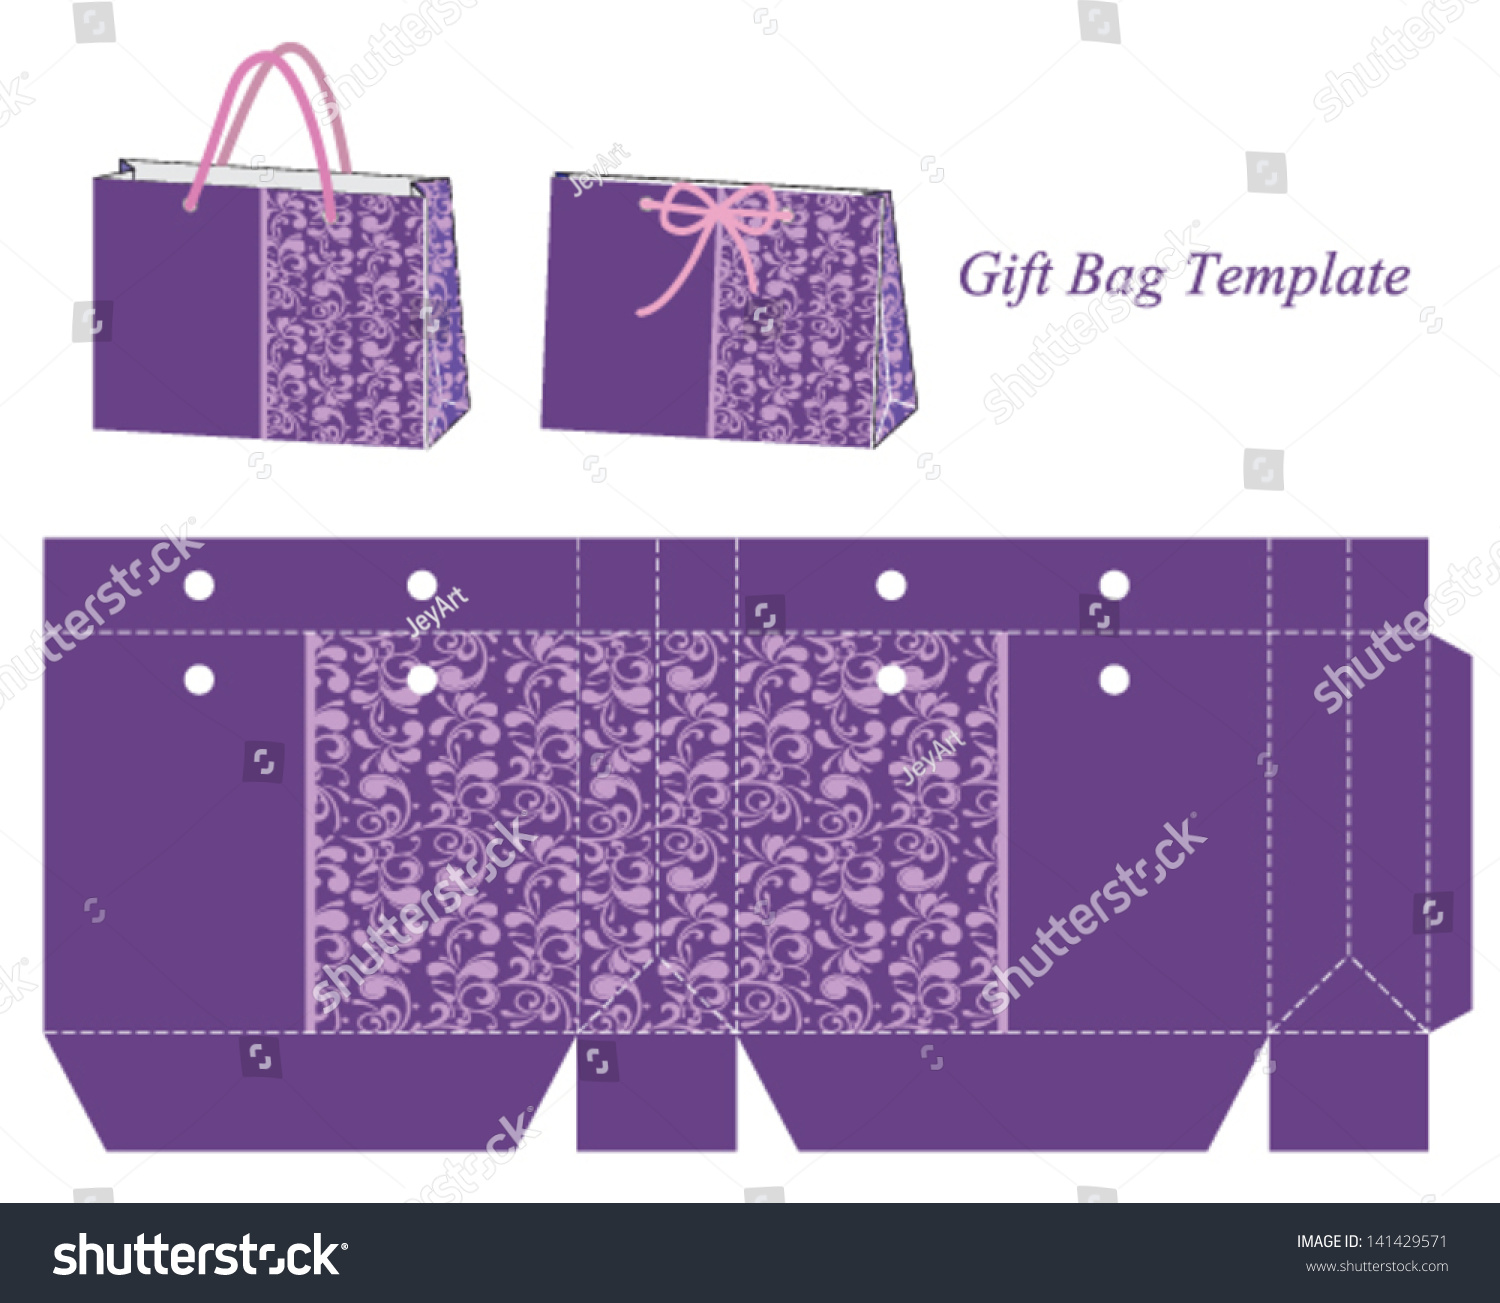 gift-bag-template-purple-floral-pattern-stock-vector-141429571-shutterstock